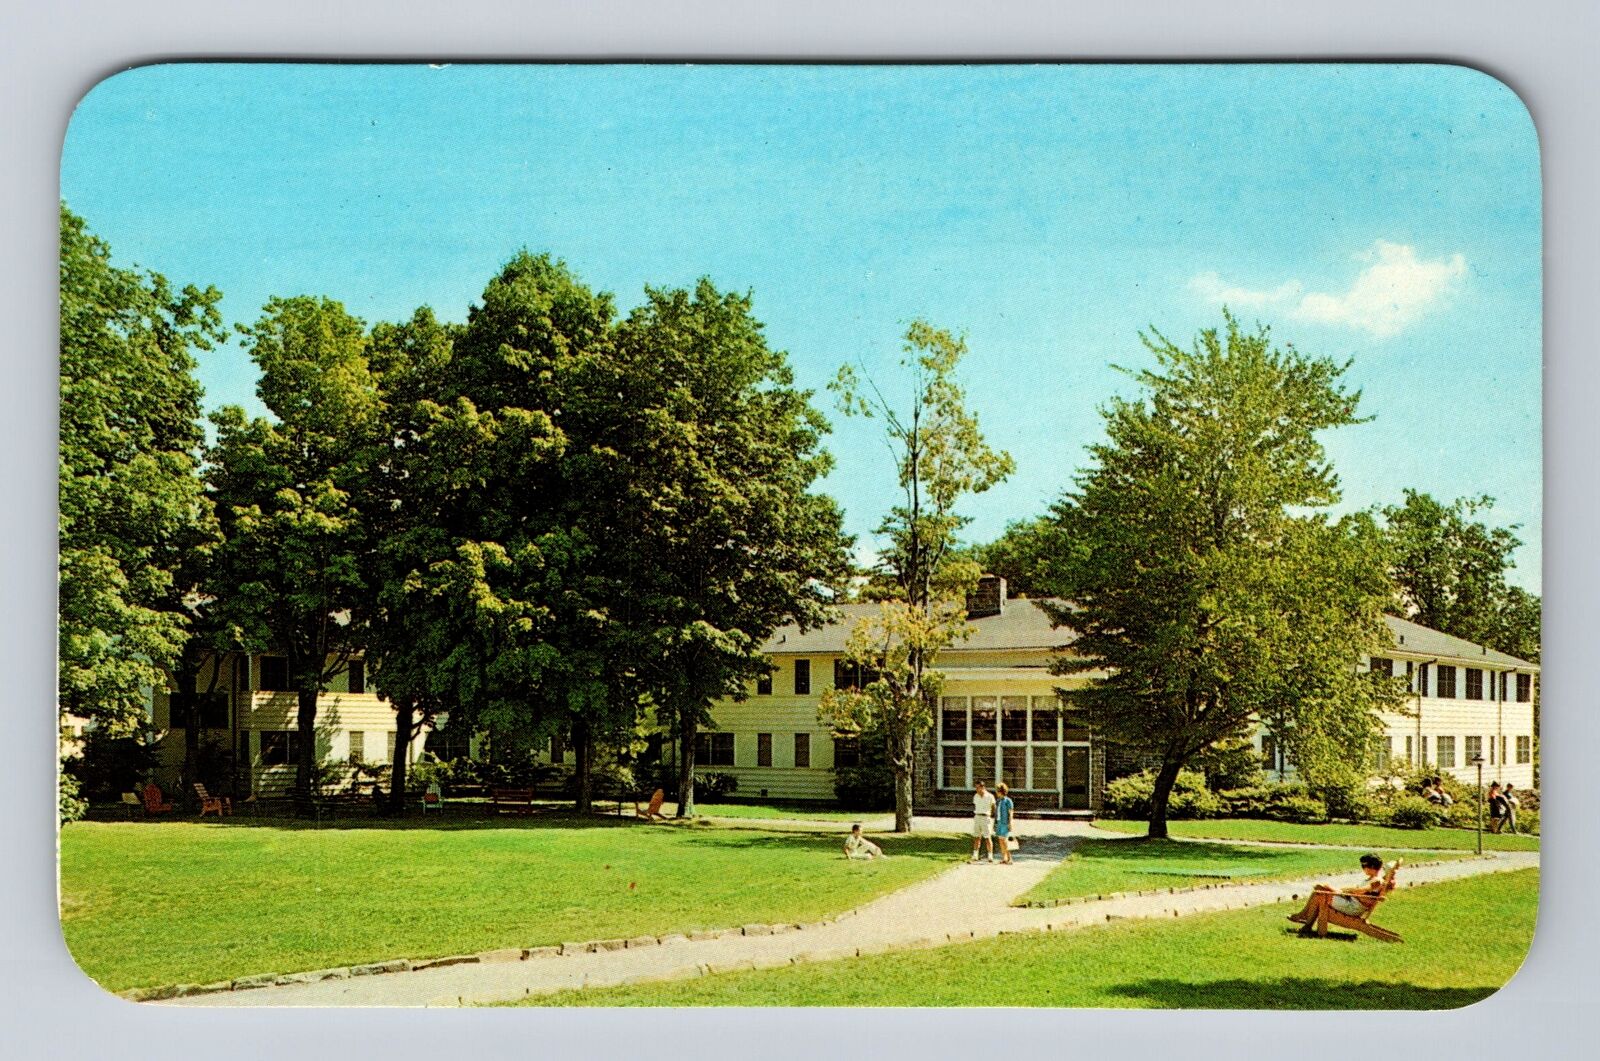 Unity House PA-Pennsylvania, Unity House Resort Hotel, Antique Vintage Postcard